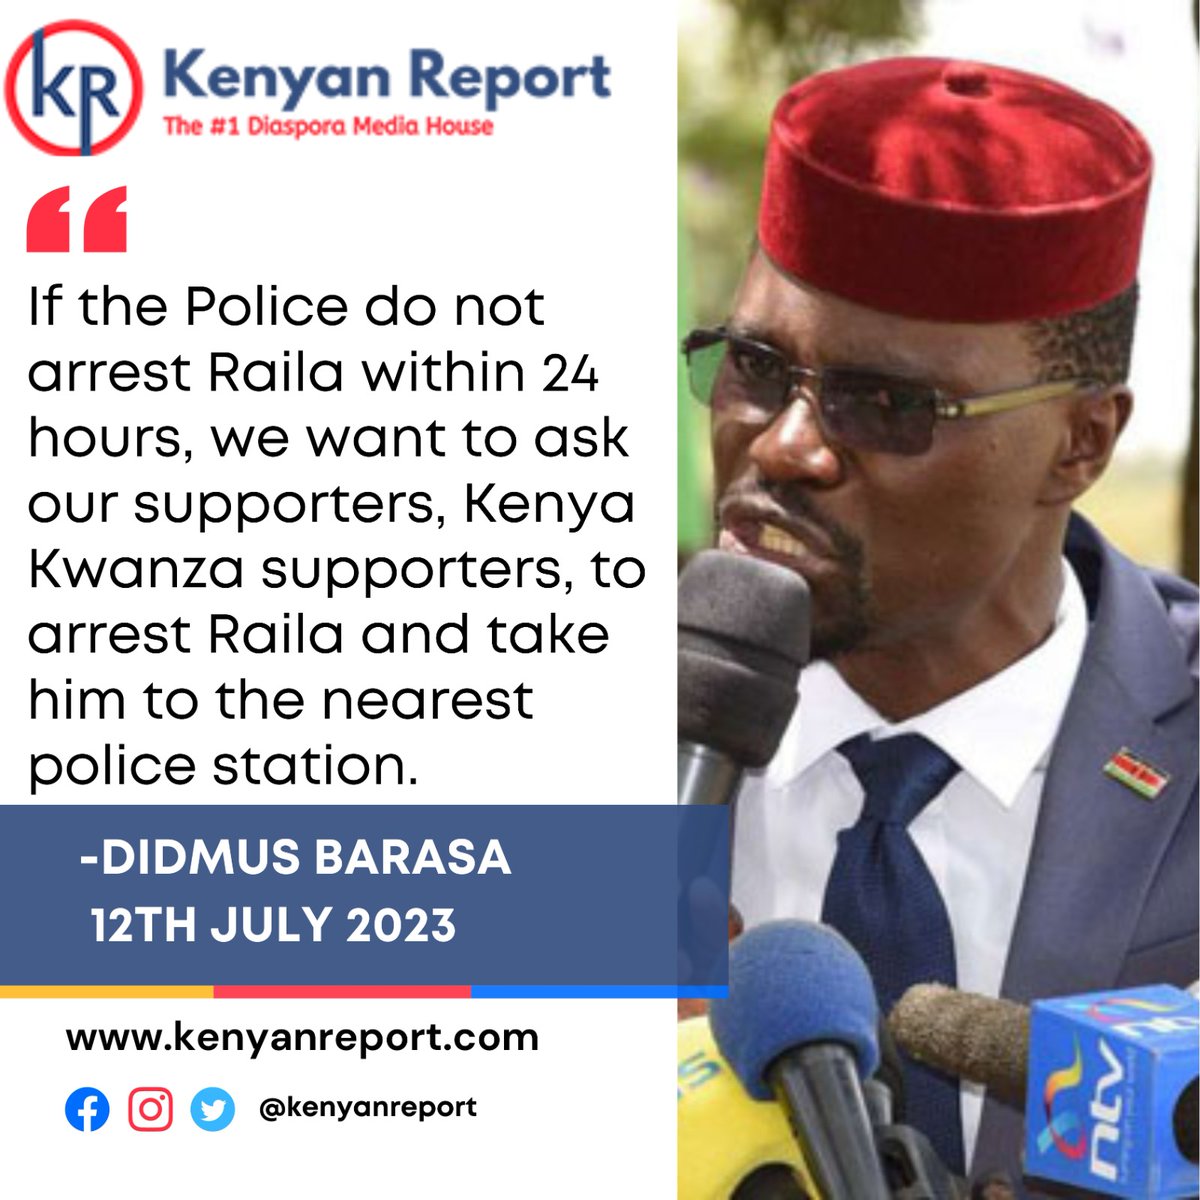 Didmus Barasa: If the IG pronounced demonstrations illegal then they should arrest Raila Odinga. We ask Kenyans if you see Raila Odinga arrest him. https://t.co/rdMI0DskDX